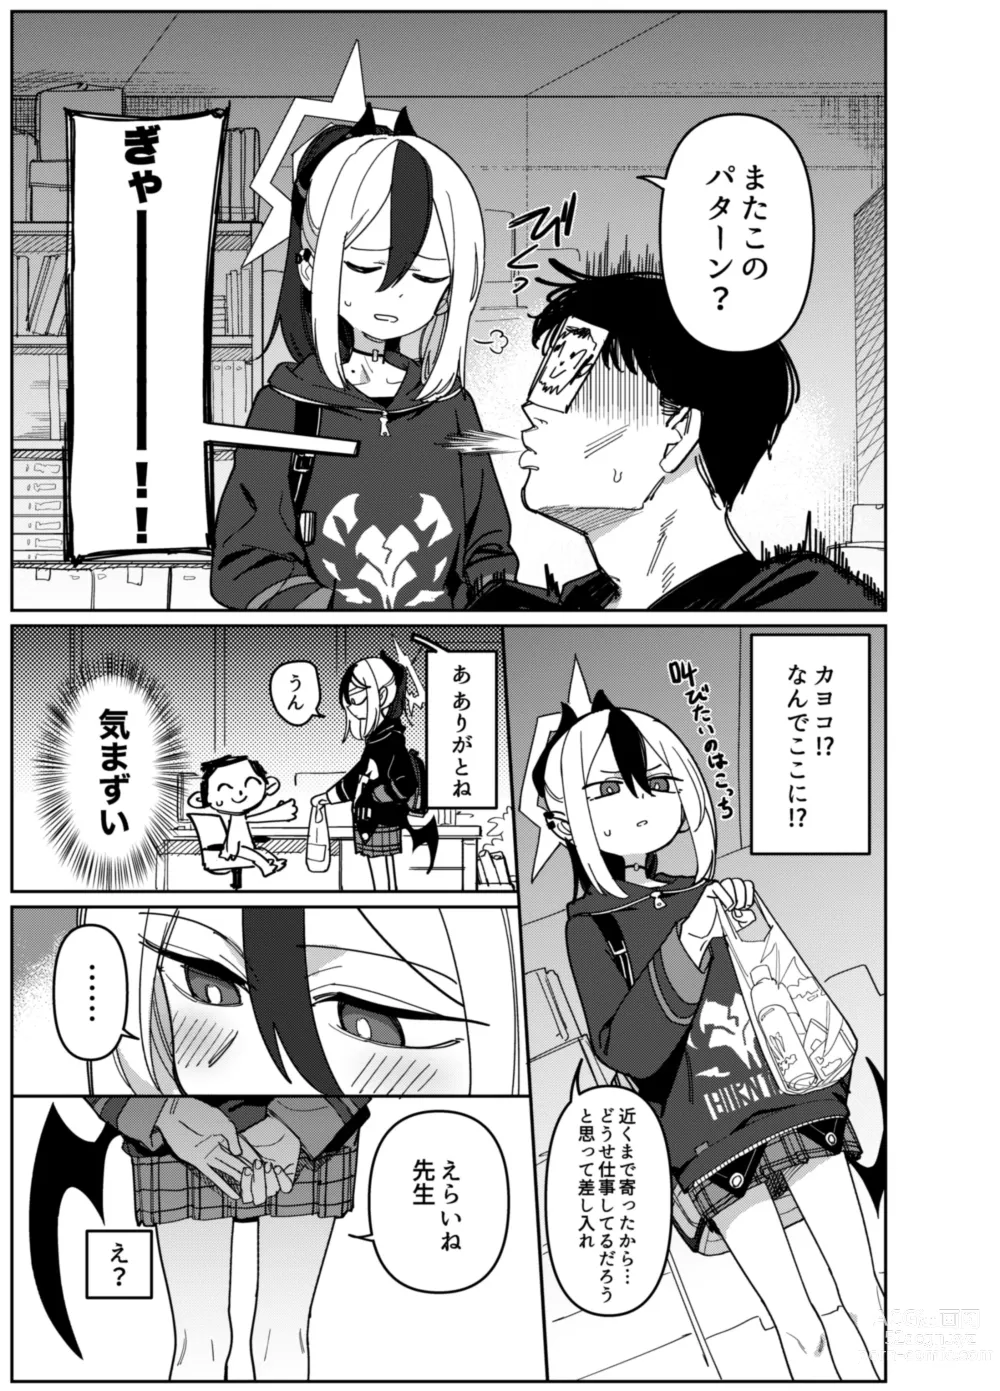 Page 5 of doujinshi Onikata Kayoko wa Konna Koto Shinai. Part. 2 - Onikata Kayoko wont do this type of stuff.